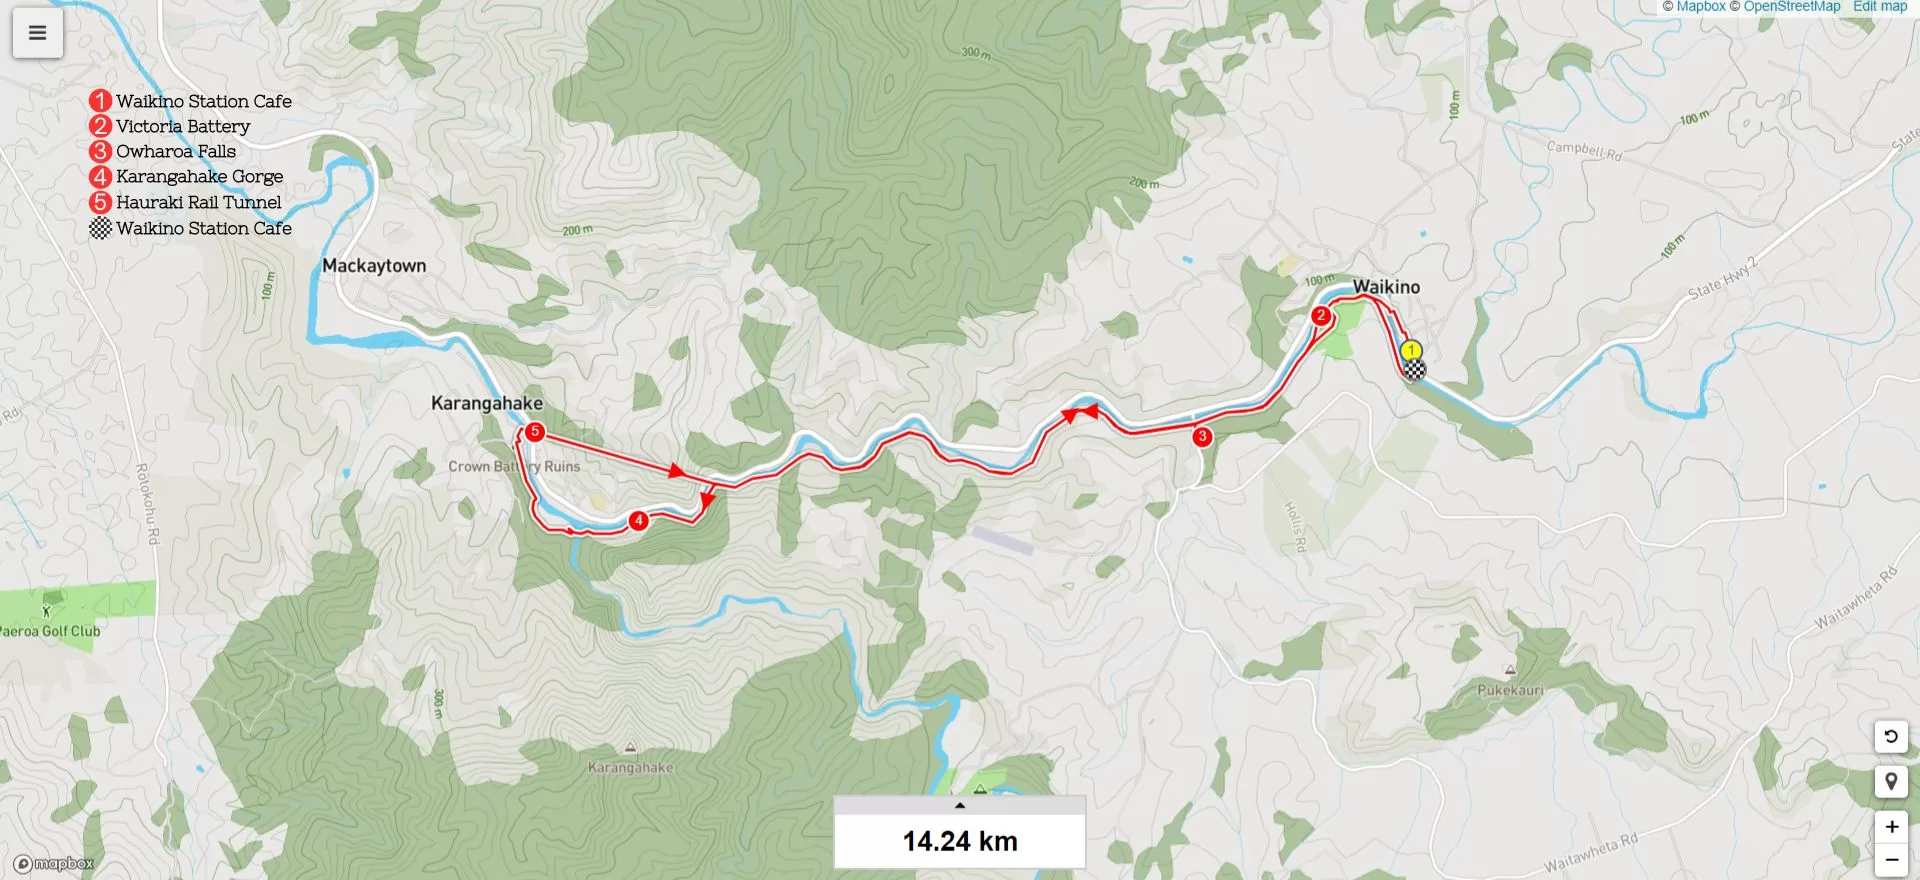 Trail Map of Karangahake Gorge